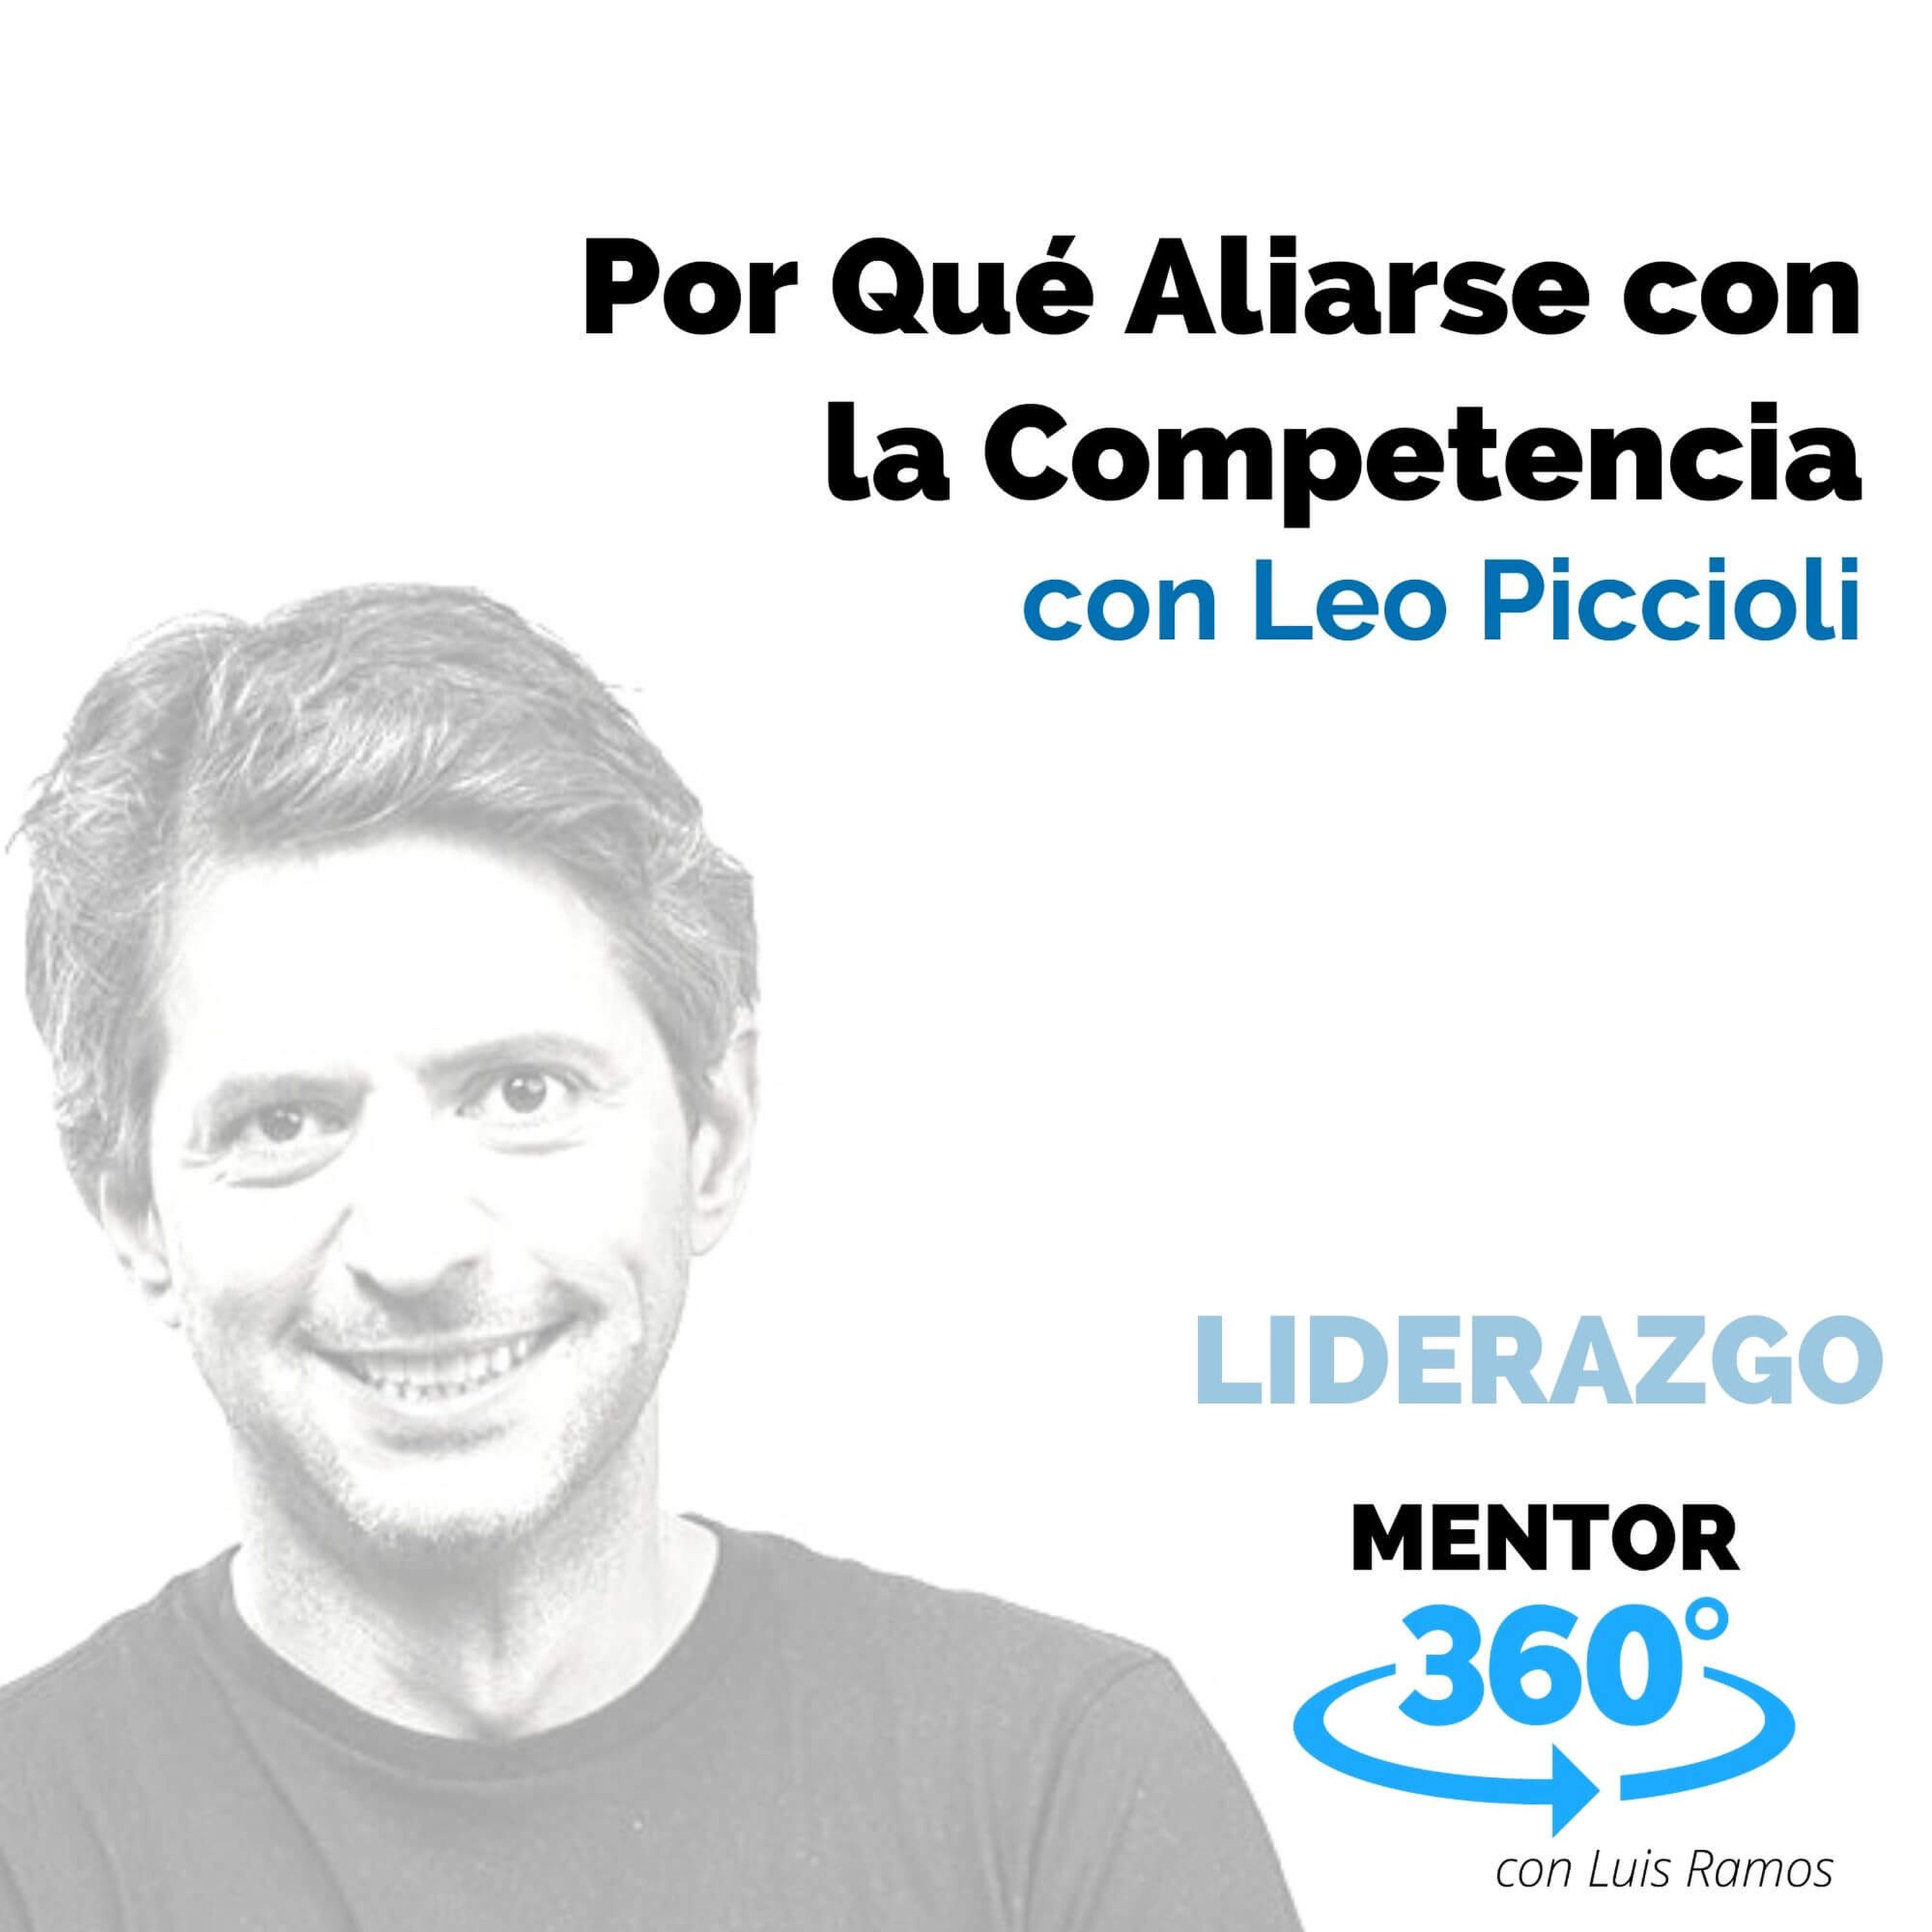 Por qué aliarse con la competencia, con Leo Piccioli - LIDERAZGO - MENTOR360